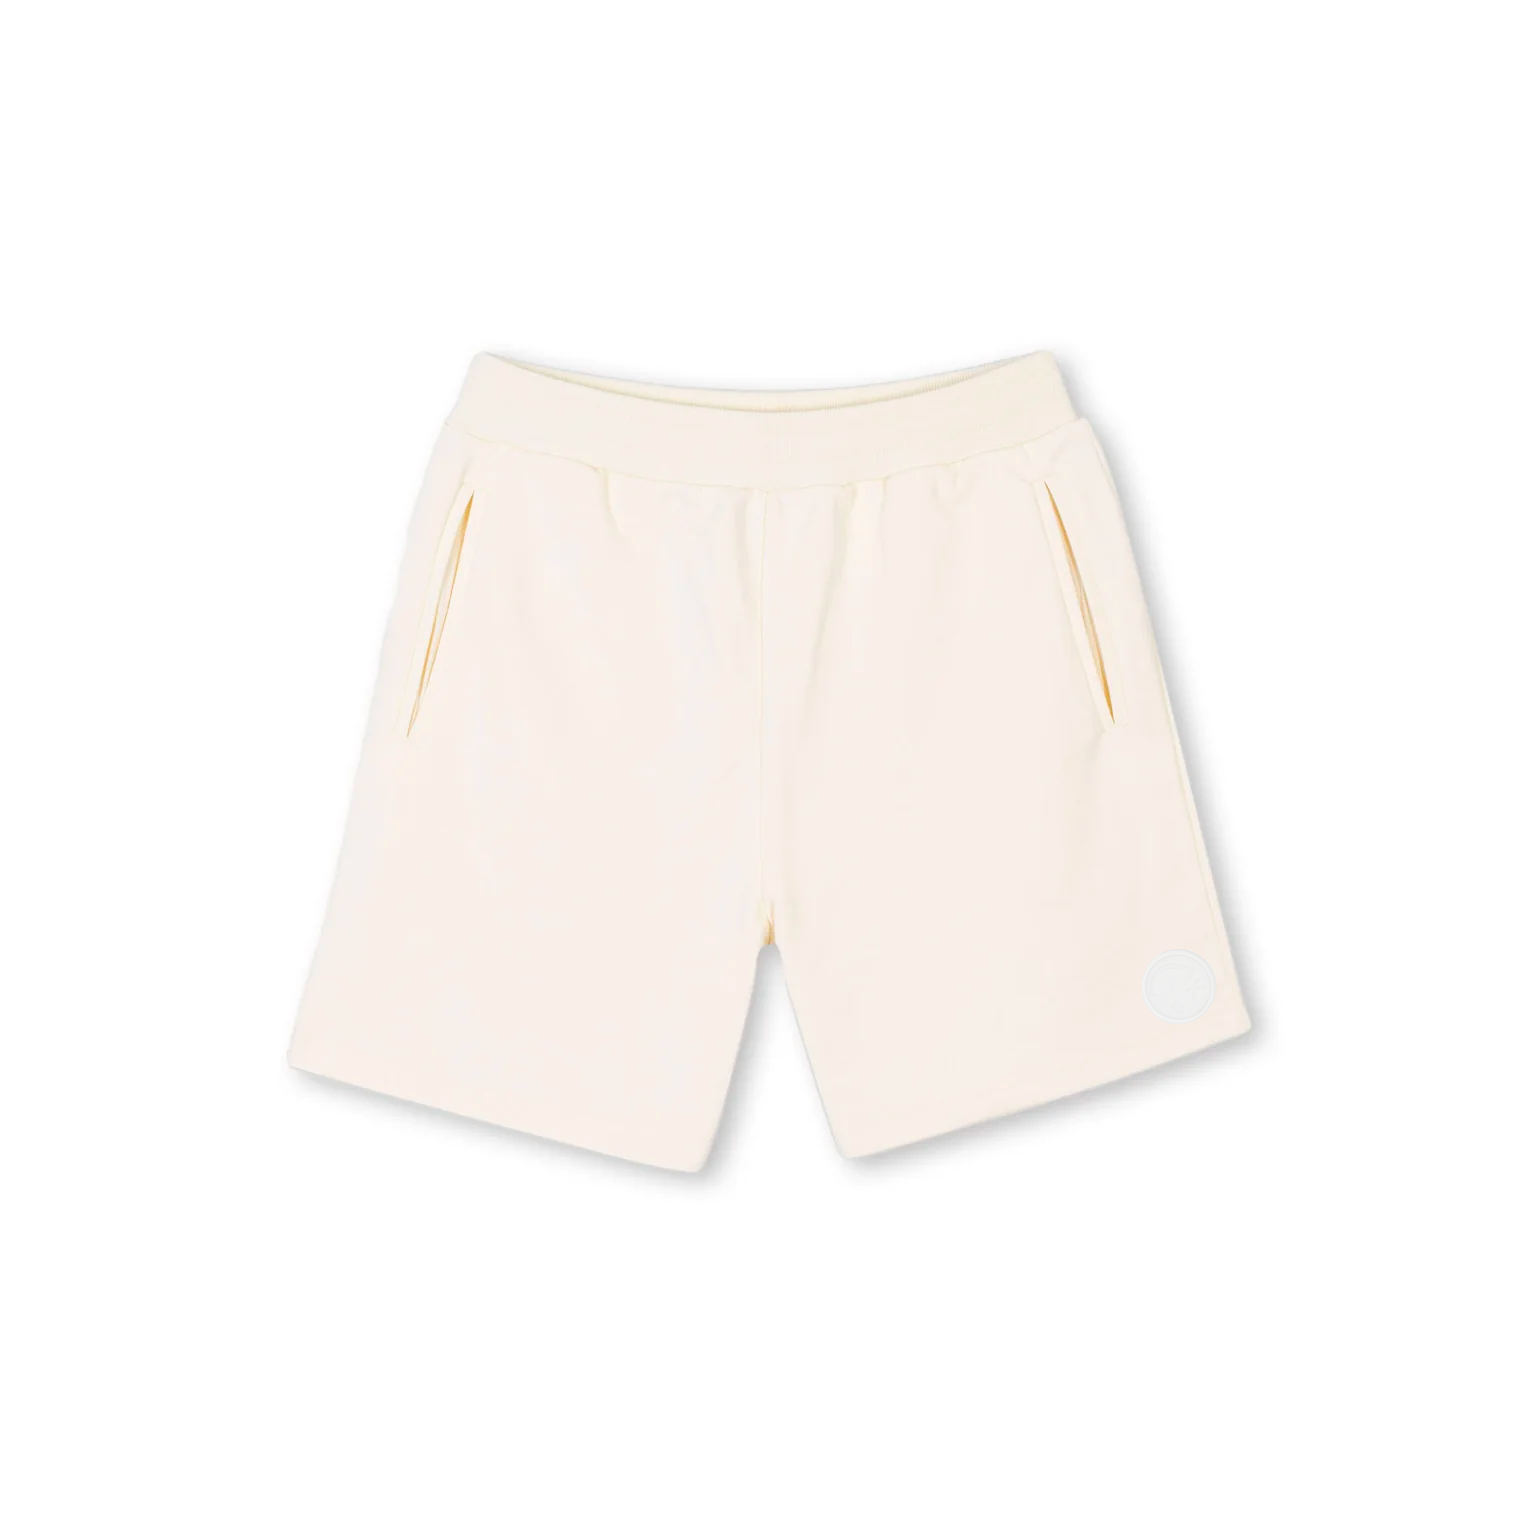 Cream Summer Shorts (Coming Soon)